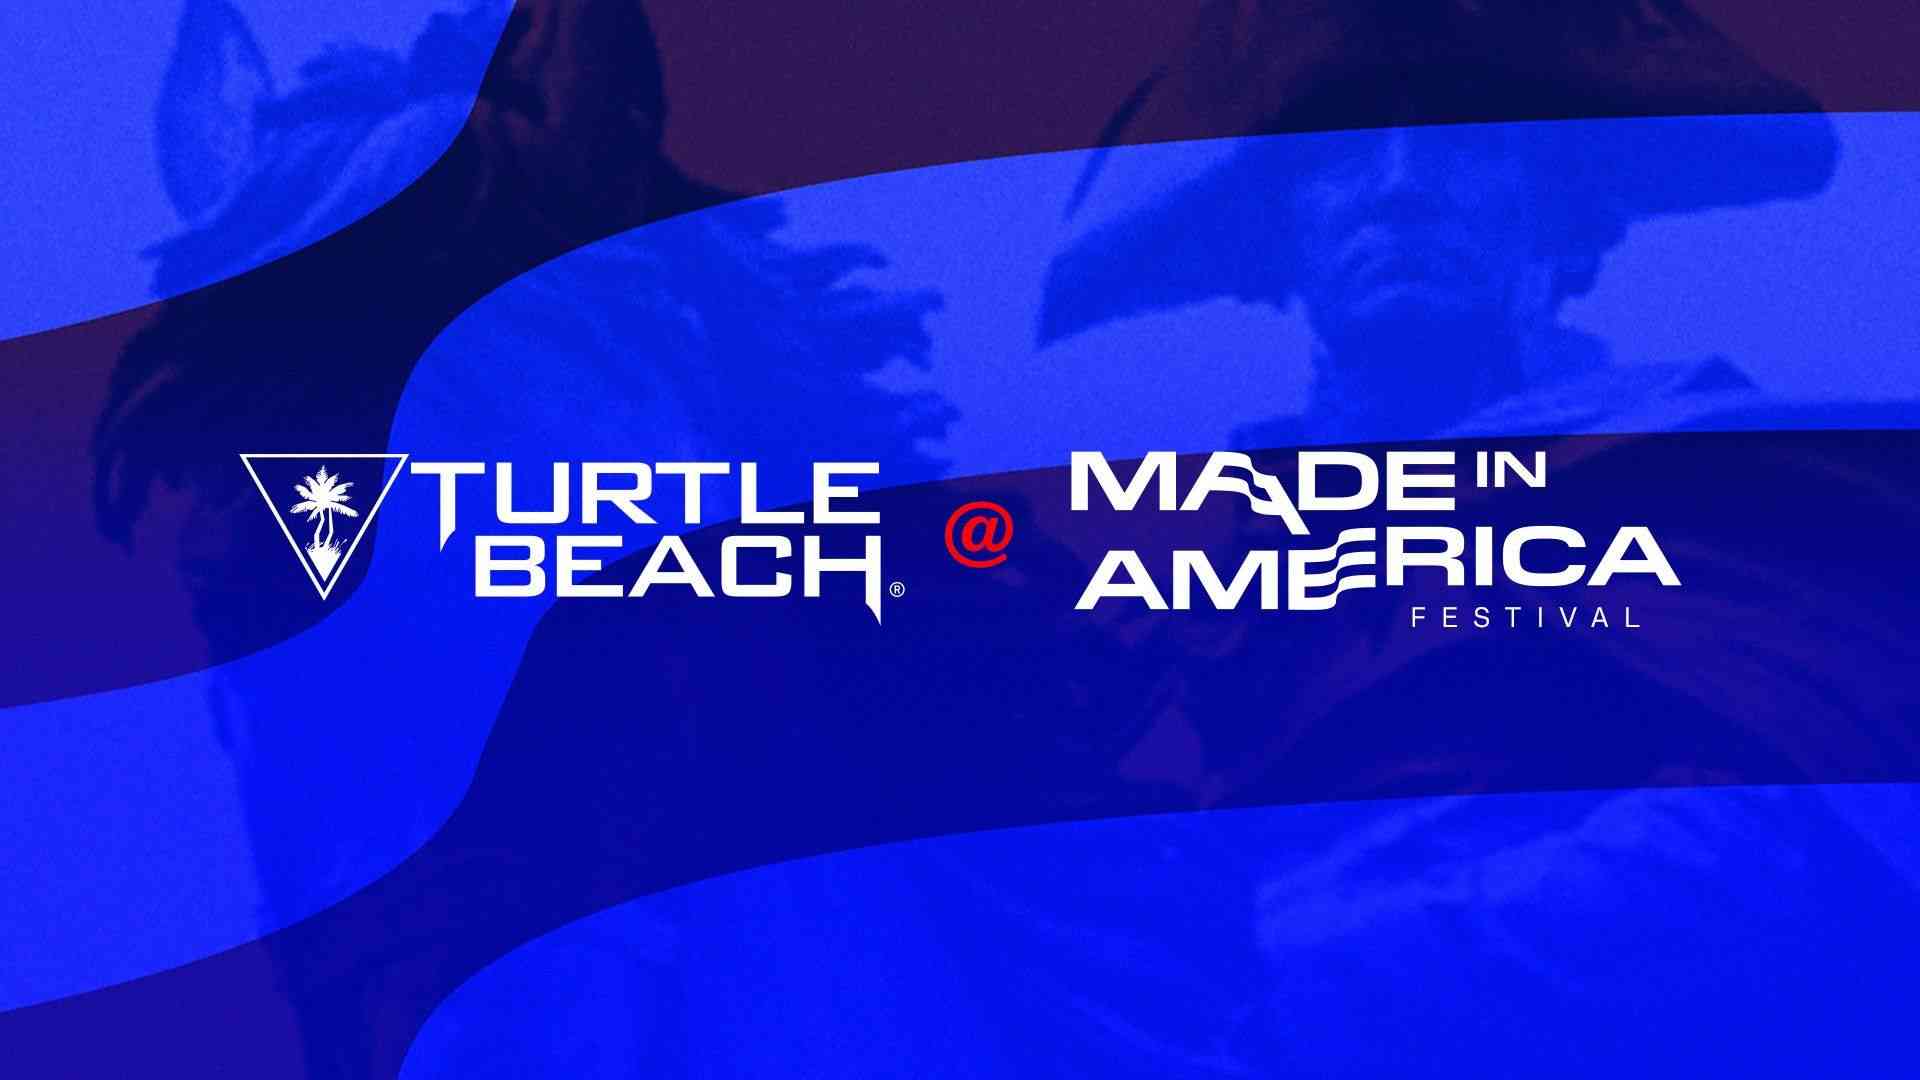 turtle beach brings gaming to made in america festival 3006 big 1